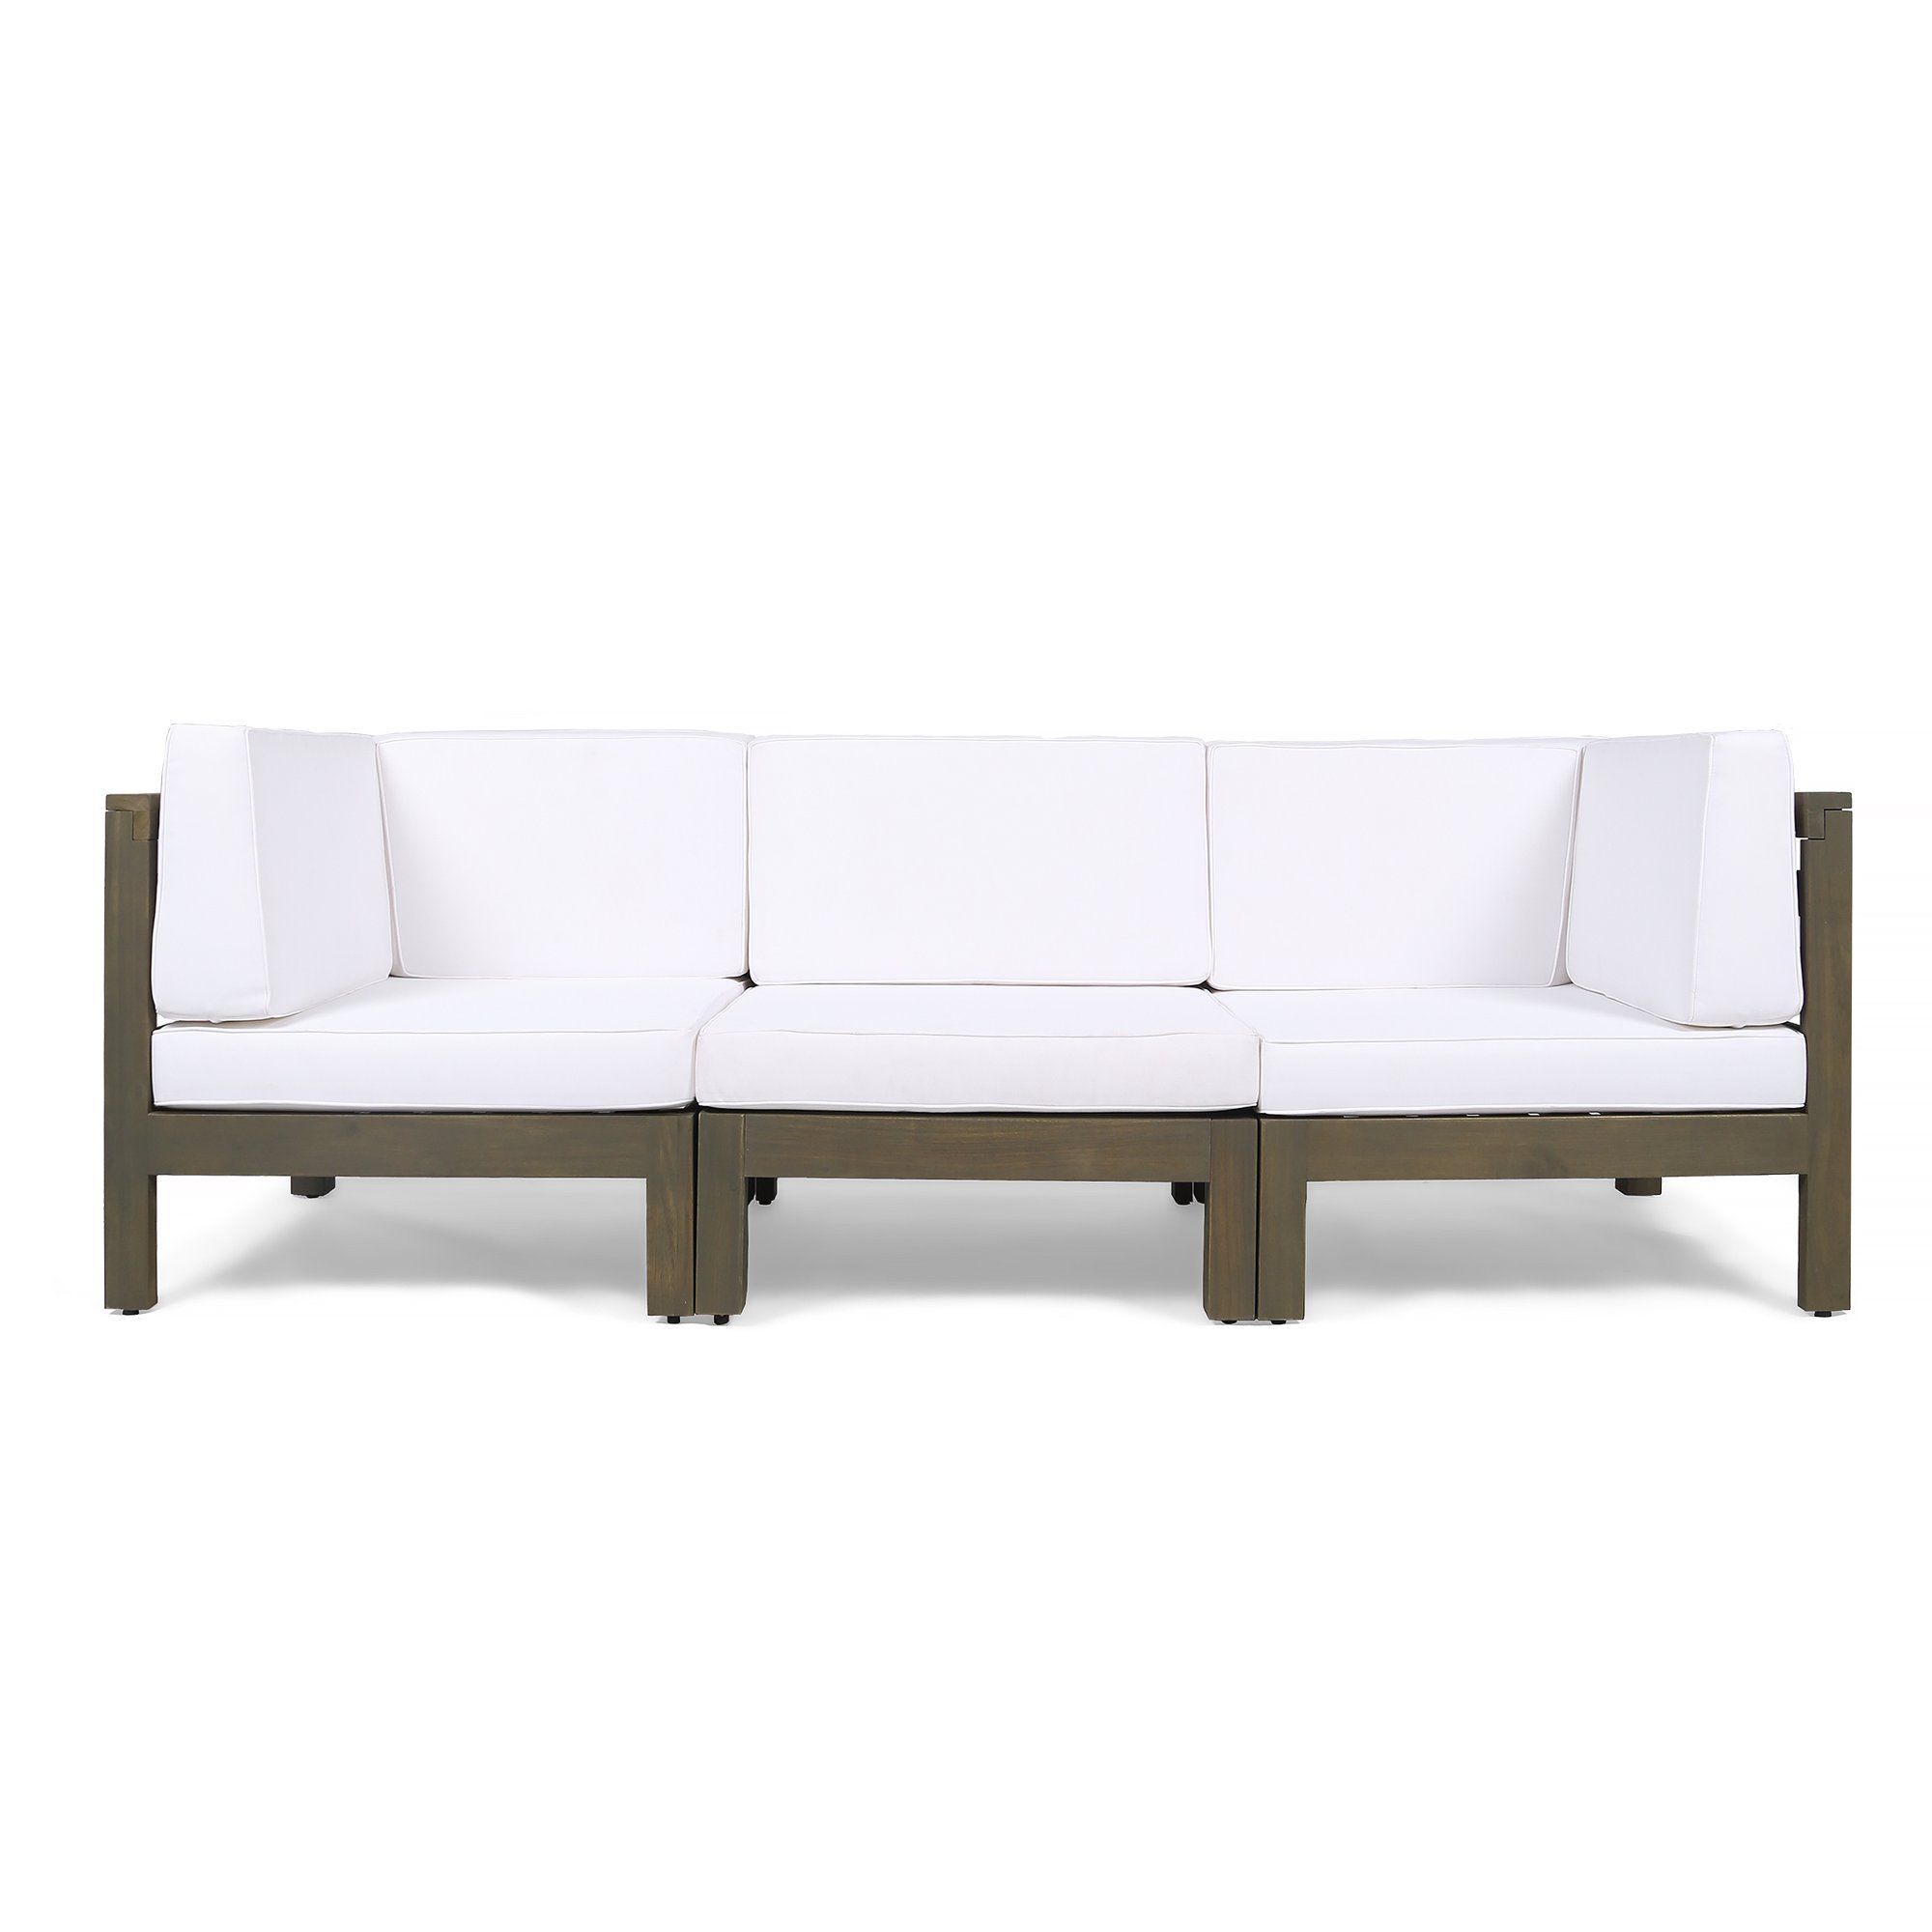 Ravello Outdoor Modular Acacia Wood Sofa with Cushions, Gray and White | Walmart (US)